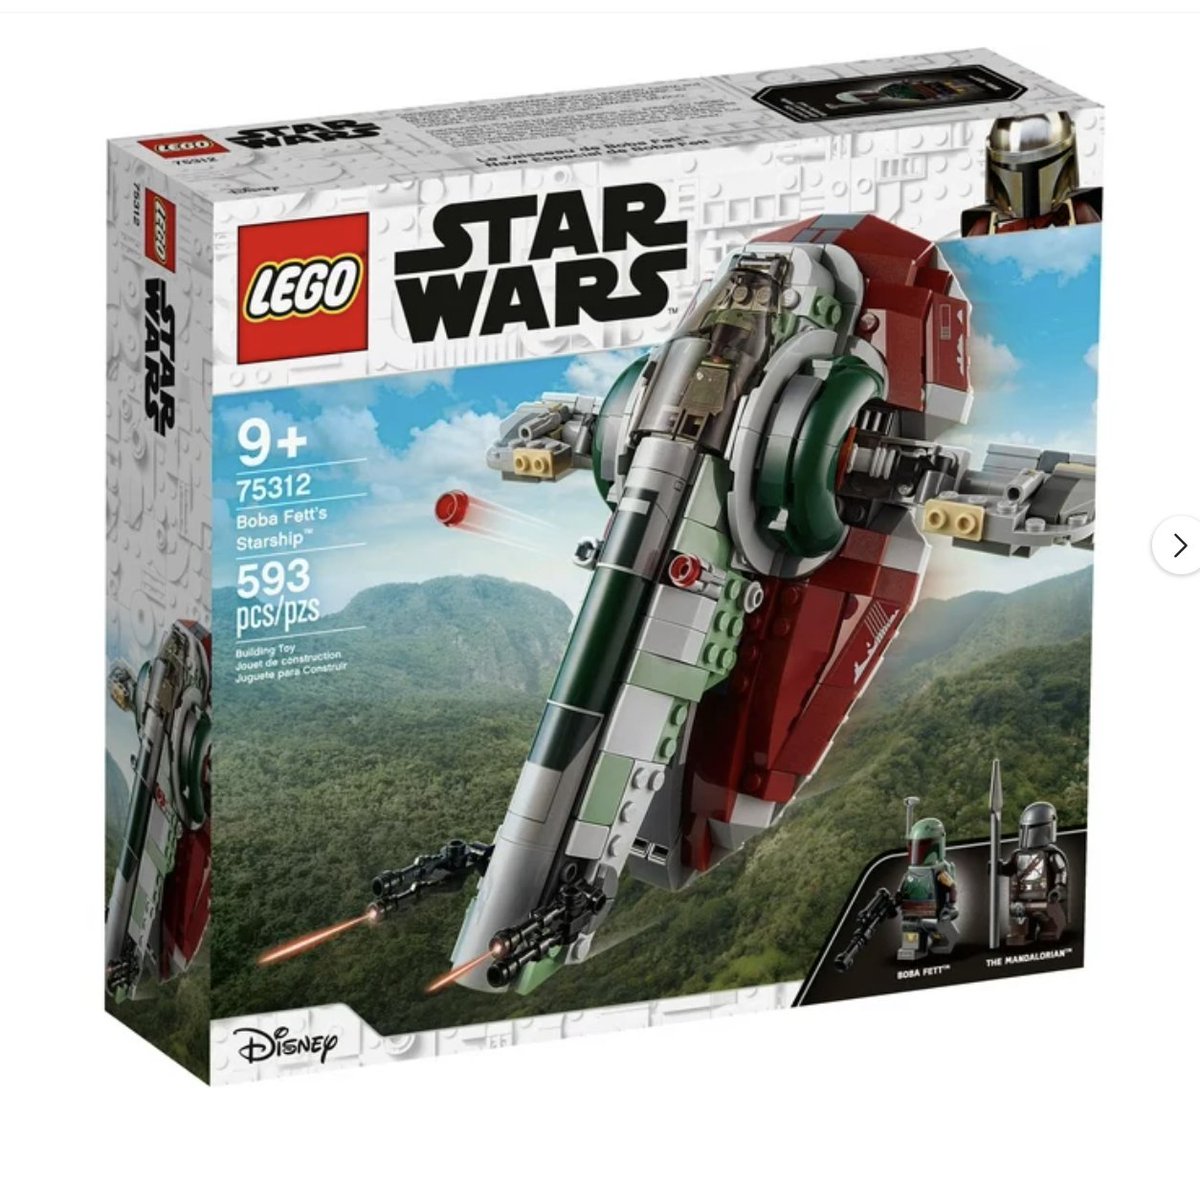 HUGE Lego sale @ Walmart! Star Wars Boba Fett Starship is $13 (67% off): mavely.app.link/e/JlSGZWKkyFb Marvel Iron Man Figure is $8 (79% off): mavely.app.link/e/B012dIWkyFb Star Wars Dark Trooper Attack Set Mandalorian is $8 (76% off): mavely.app.link/e/NFpgC9XkyFb Arrives before Christmas! 🎅…